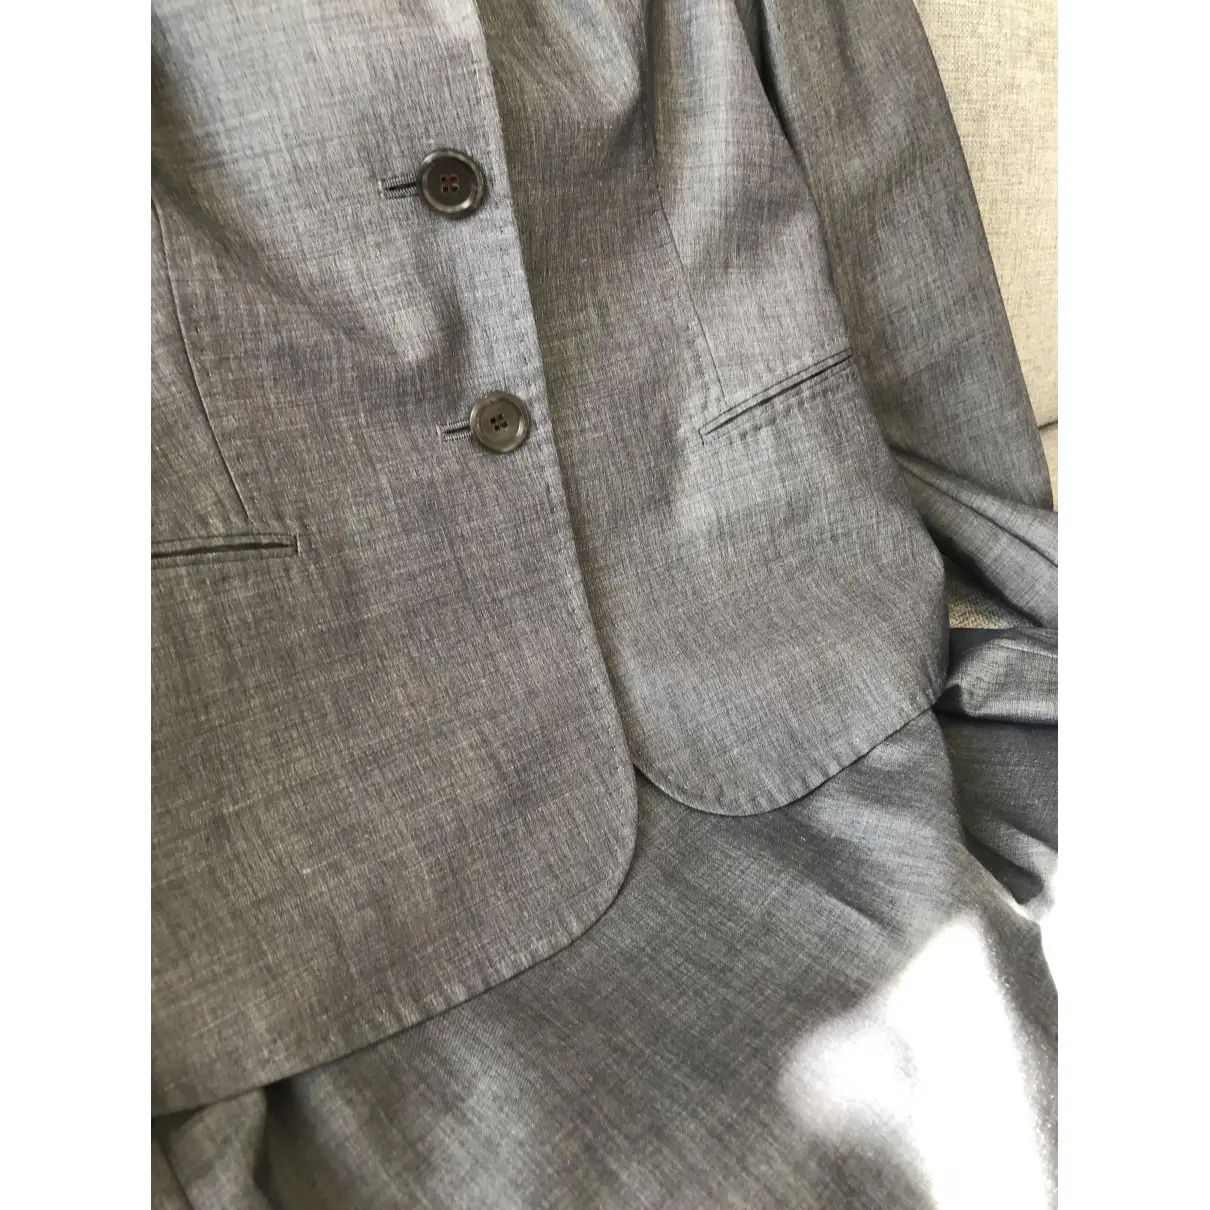 Wool suit jacket Hugo Boss